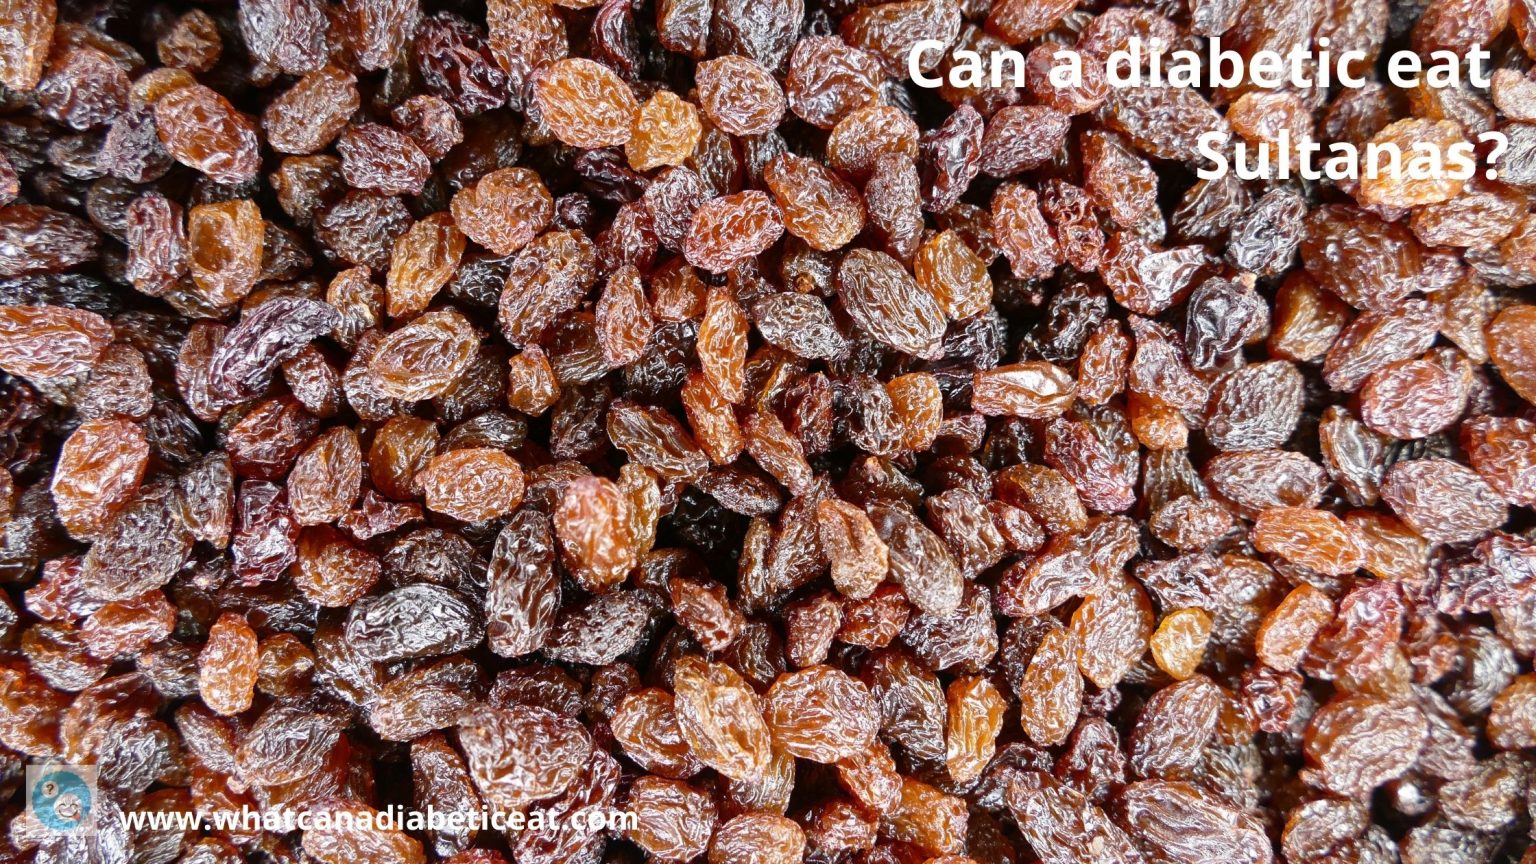 Can a diabetic eat Sultanas? Do sultanas raise blood sugar levels?